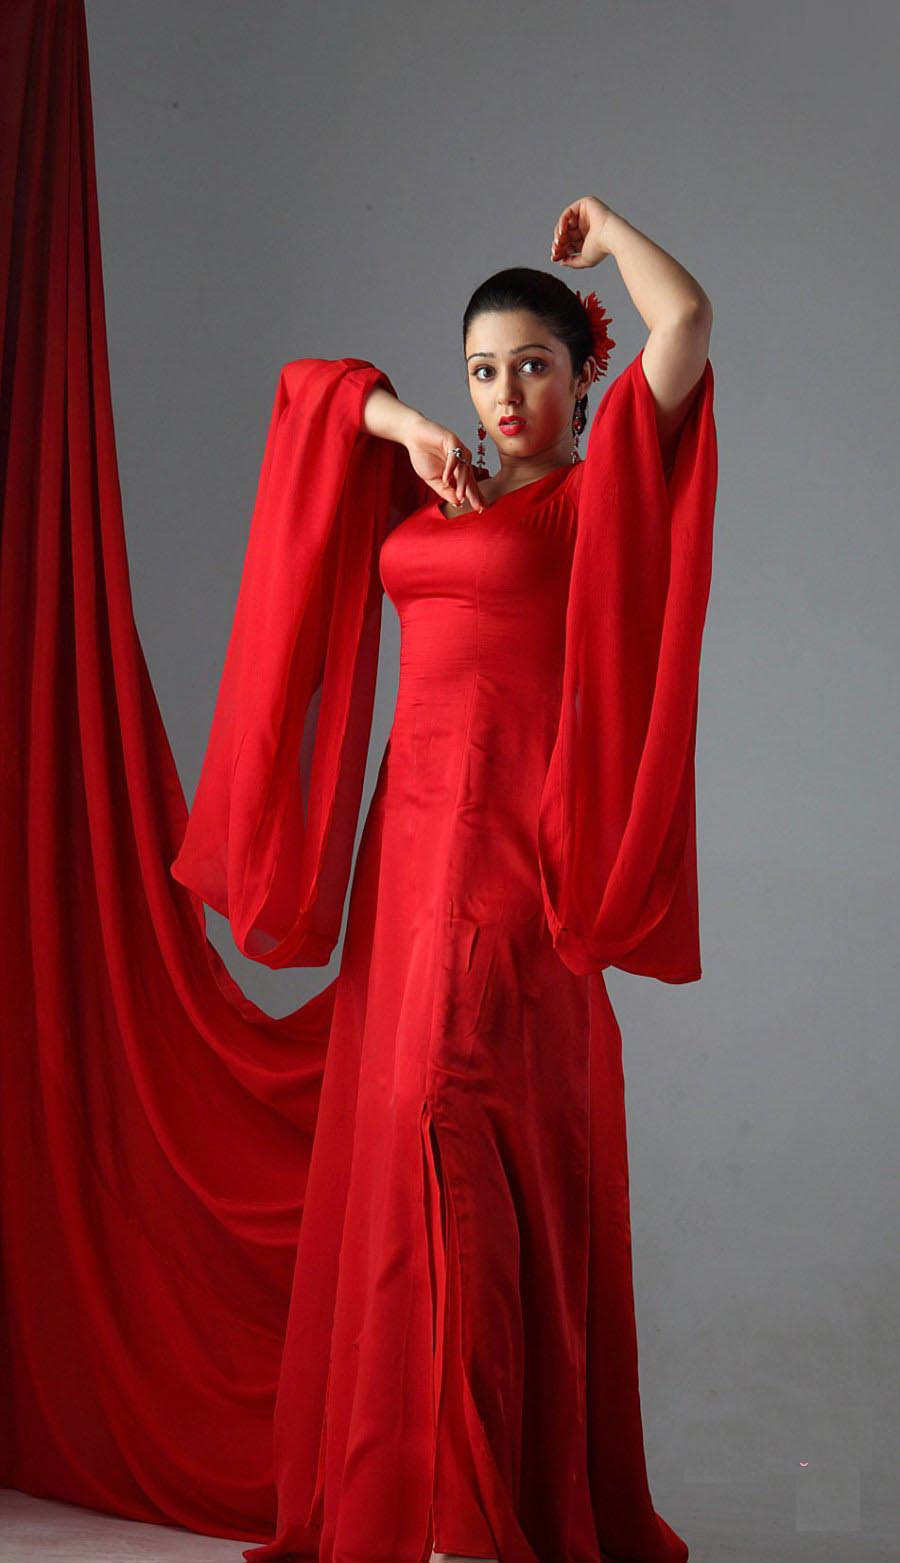 https://blogger.googleusercontent.com/img/b/R29vZ2xl/AVvXsEgmta1r_wi_0HELHr2YeivSuzORmQW5PnVn0jT3speulJV4d6rjgNU7KmVXmHFcAXZBzGsjVWJNpkBaNV8FrhmbfL8TUKEWXUjkMeErxBUhbc1CSUgv0tghLfV_blUlkNYVXyx7L-OQ3B0/s1600/Charmi++In+Red+Dress+-+Unseen+photoo+gallery+(8).jpg